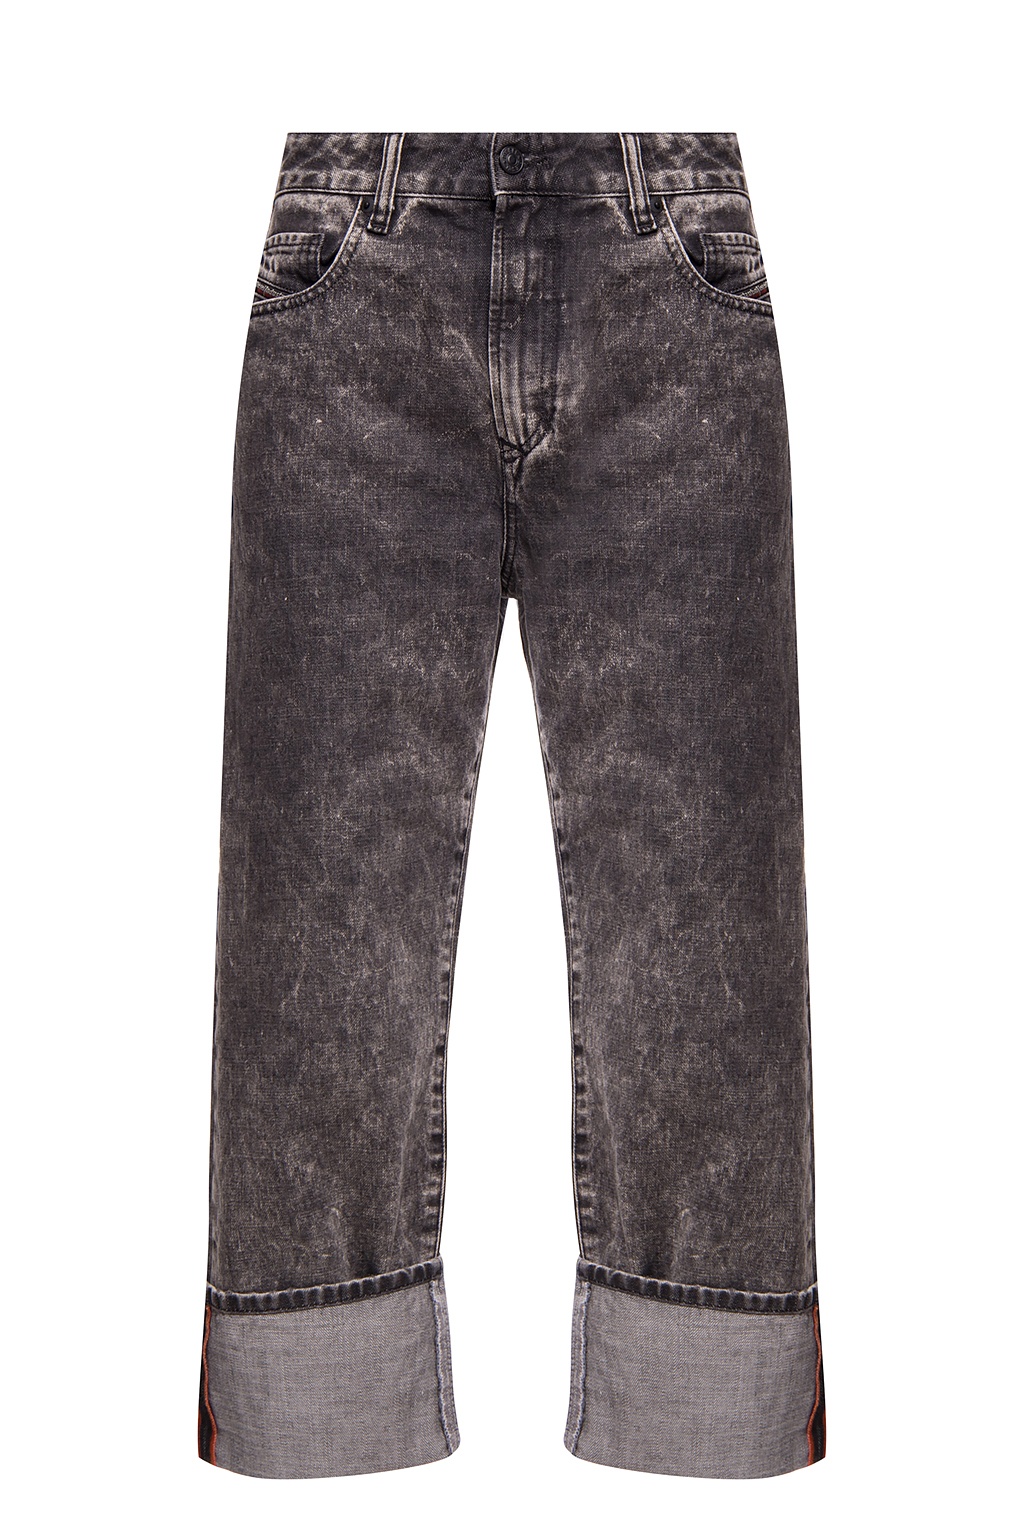 River Island Green Light Bardot Midi Dress - Reggy' jeans Diesel -  GenesinlifeShops GB - Grey 'D